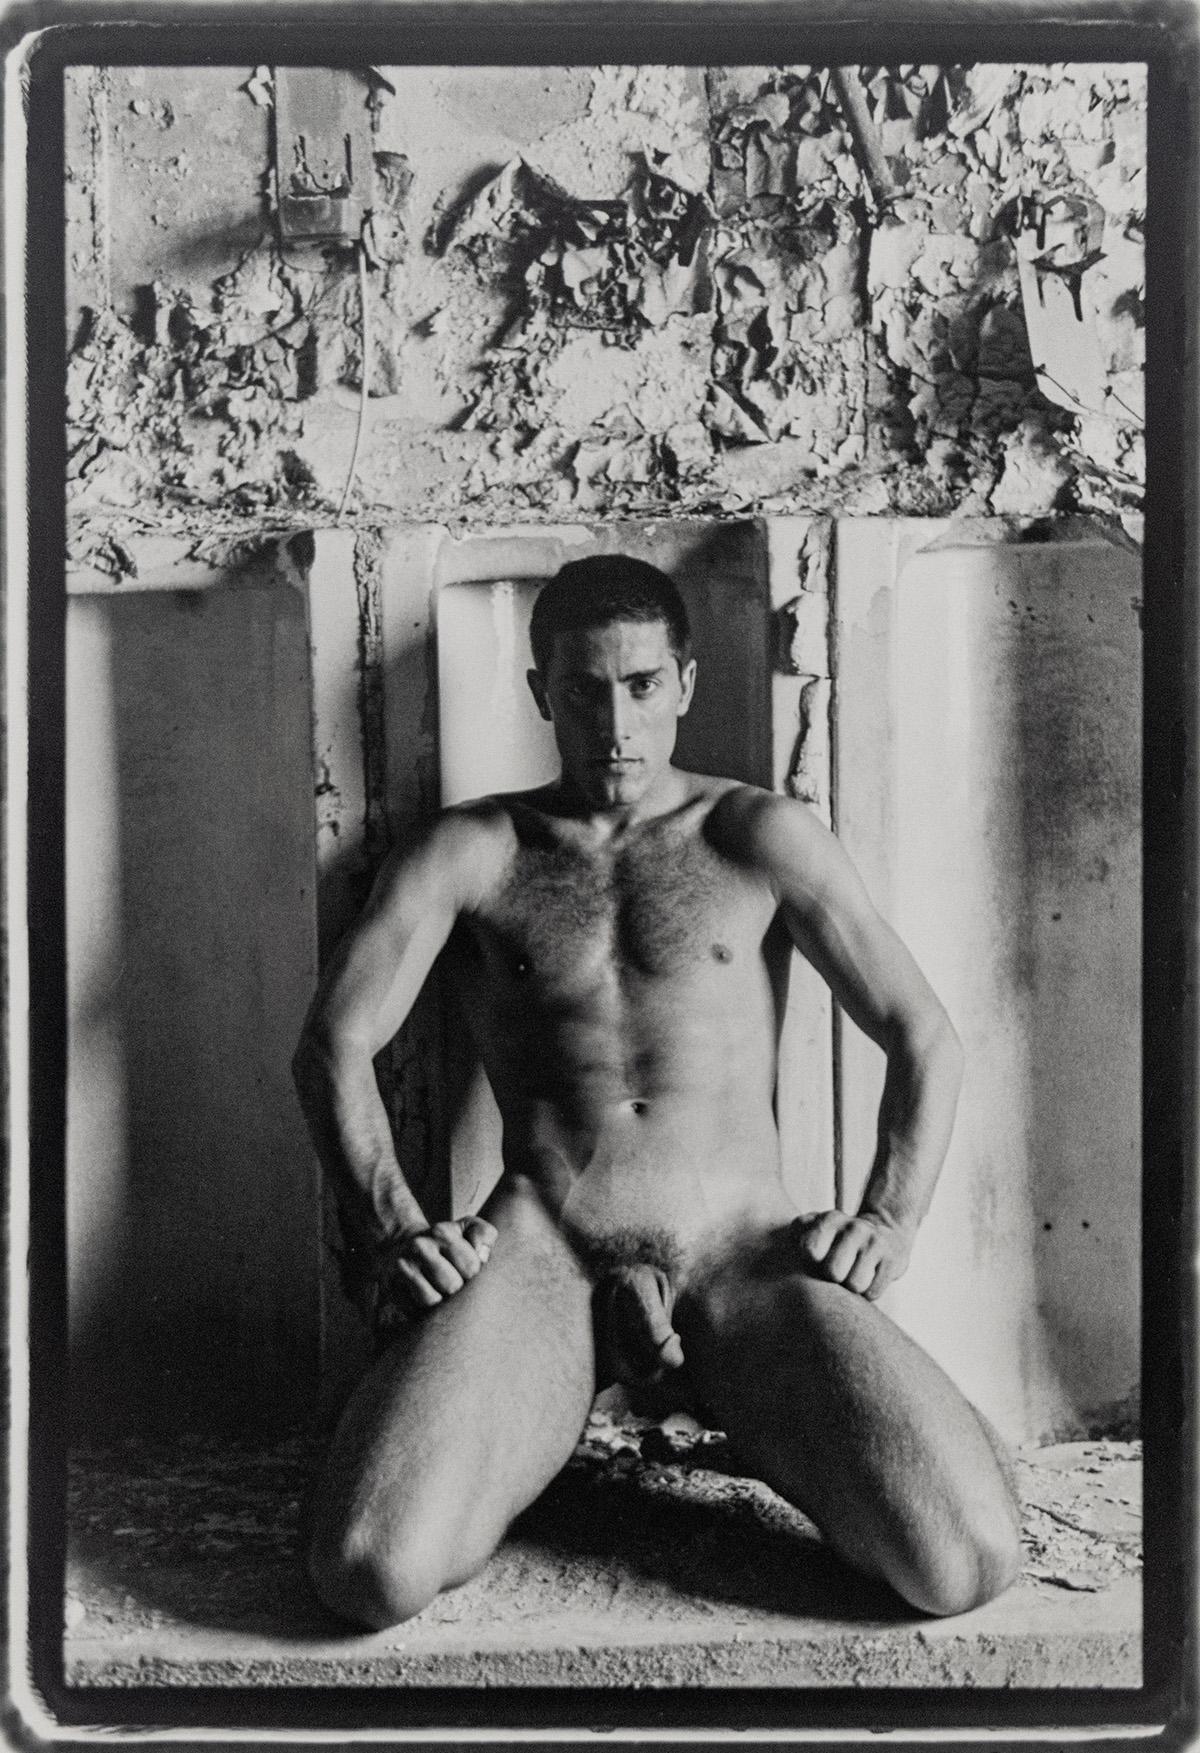 Bill Costa Nude Photograph - Untitled